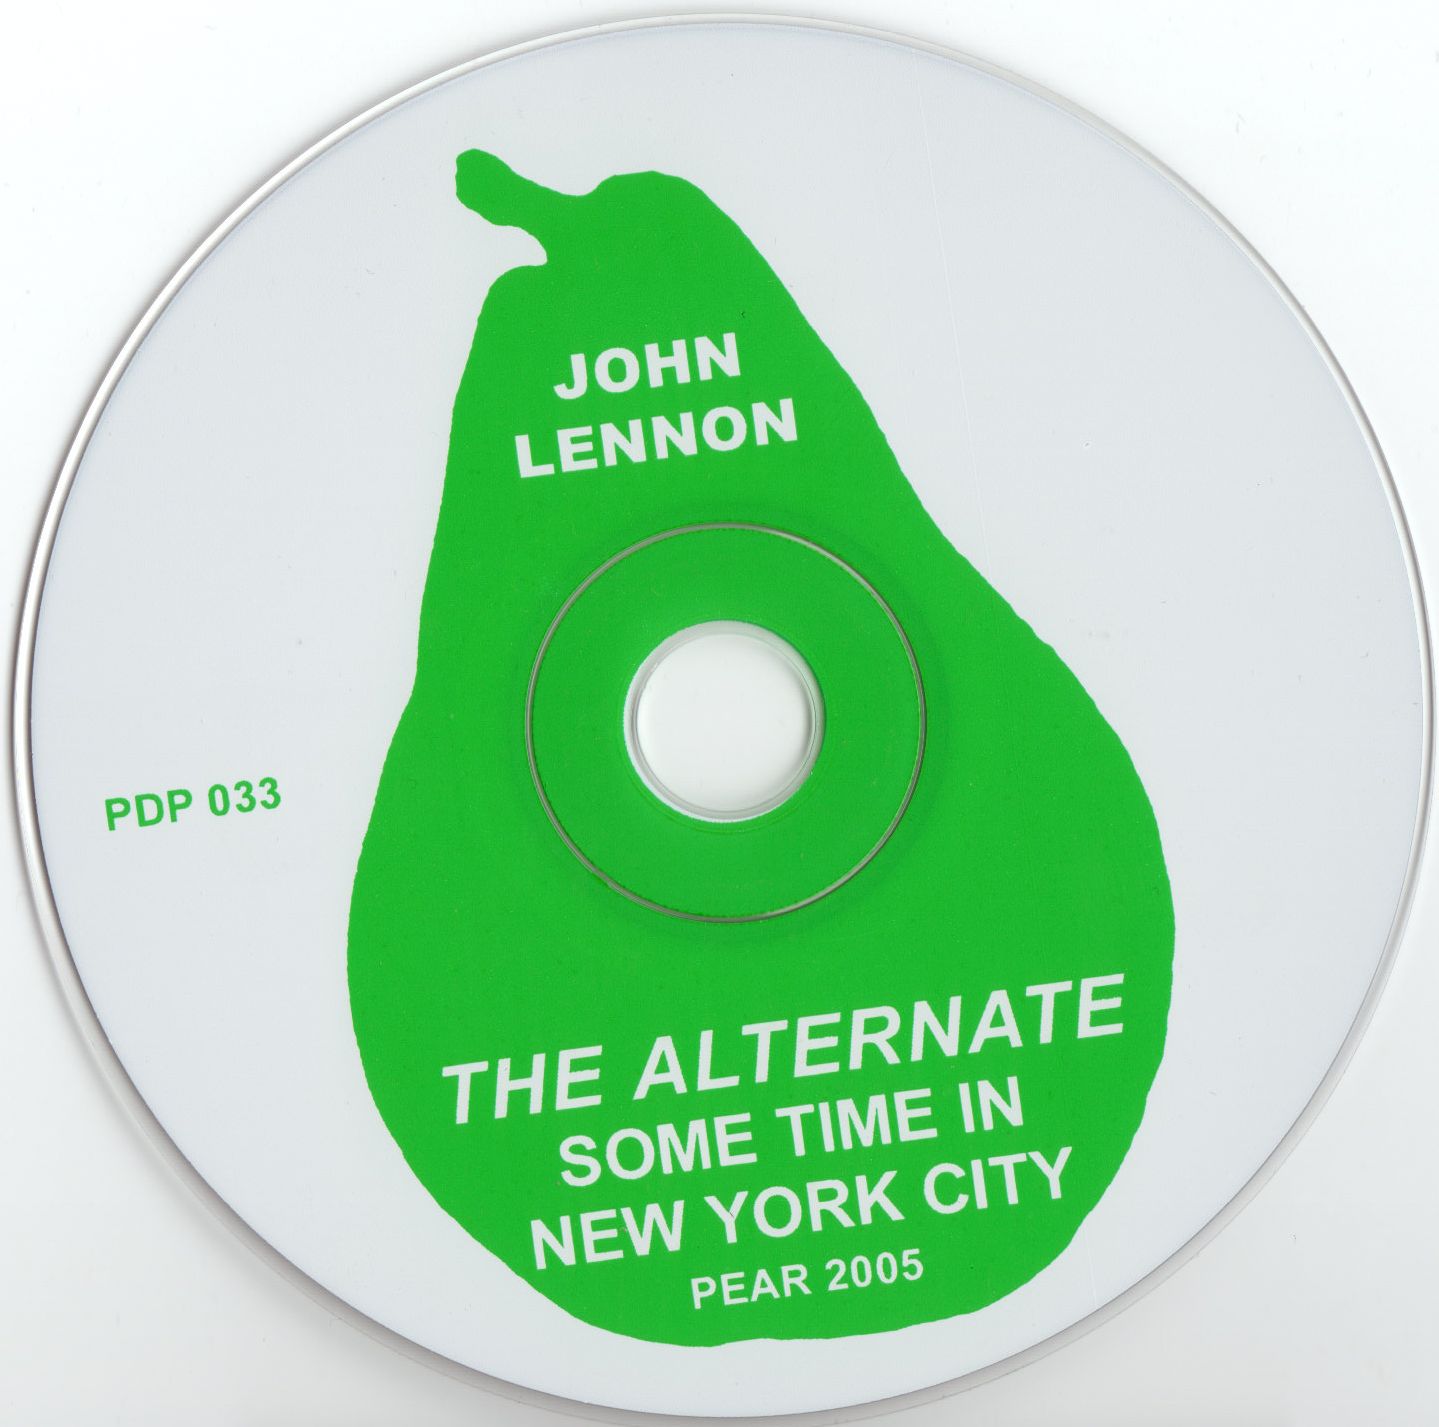 JohnLennon-AlternateSometimeInNewYorkCity (3).jpg